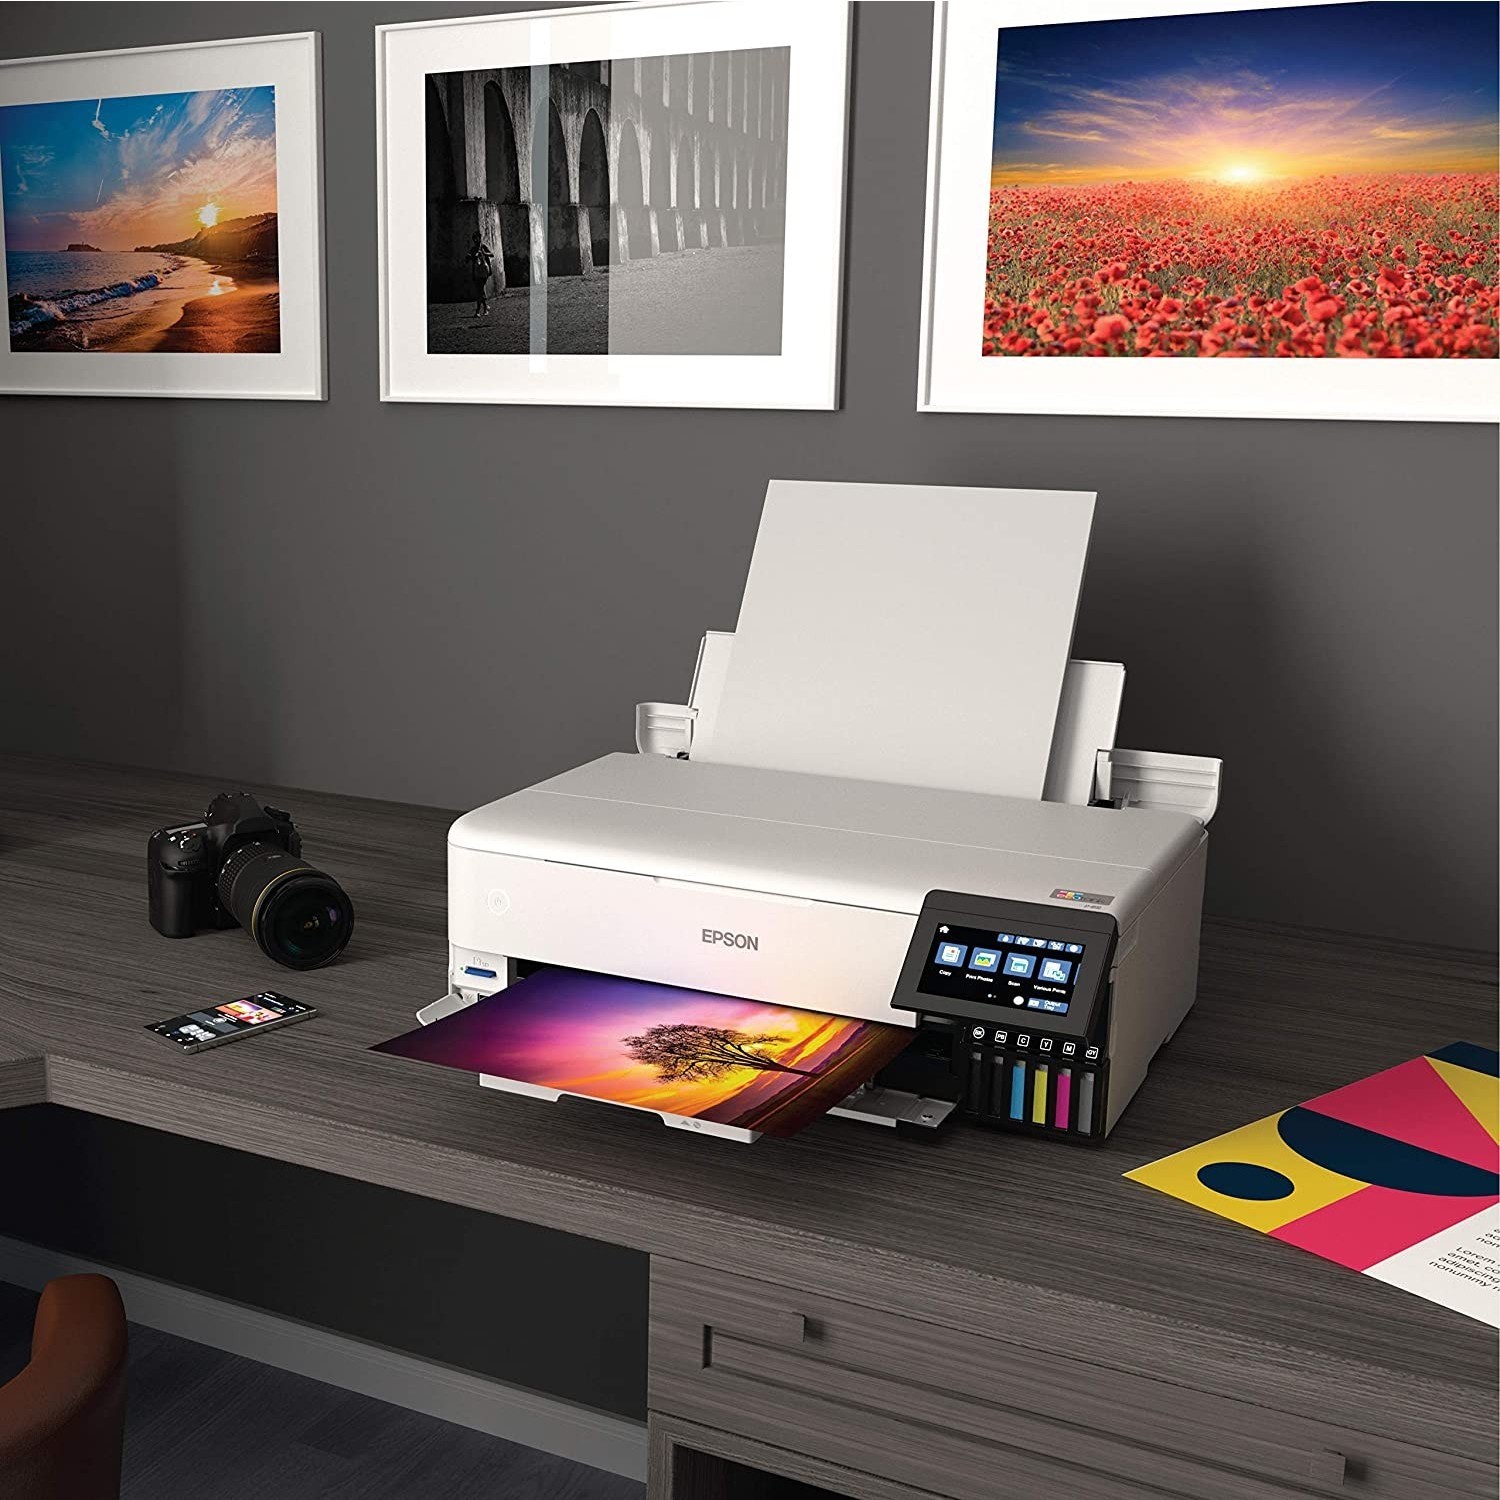 Print end r. Epson 8550. Фотопринтер Epson ECOTANK et-8550. Принтер цветной 102×152. Deli принтер цветной.